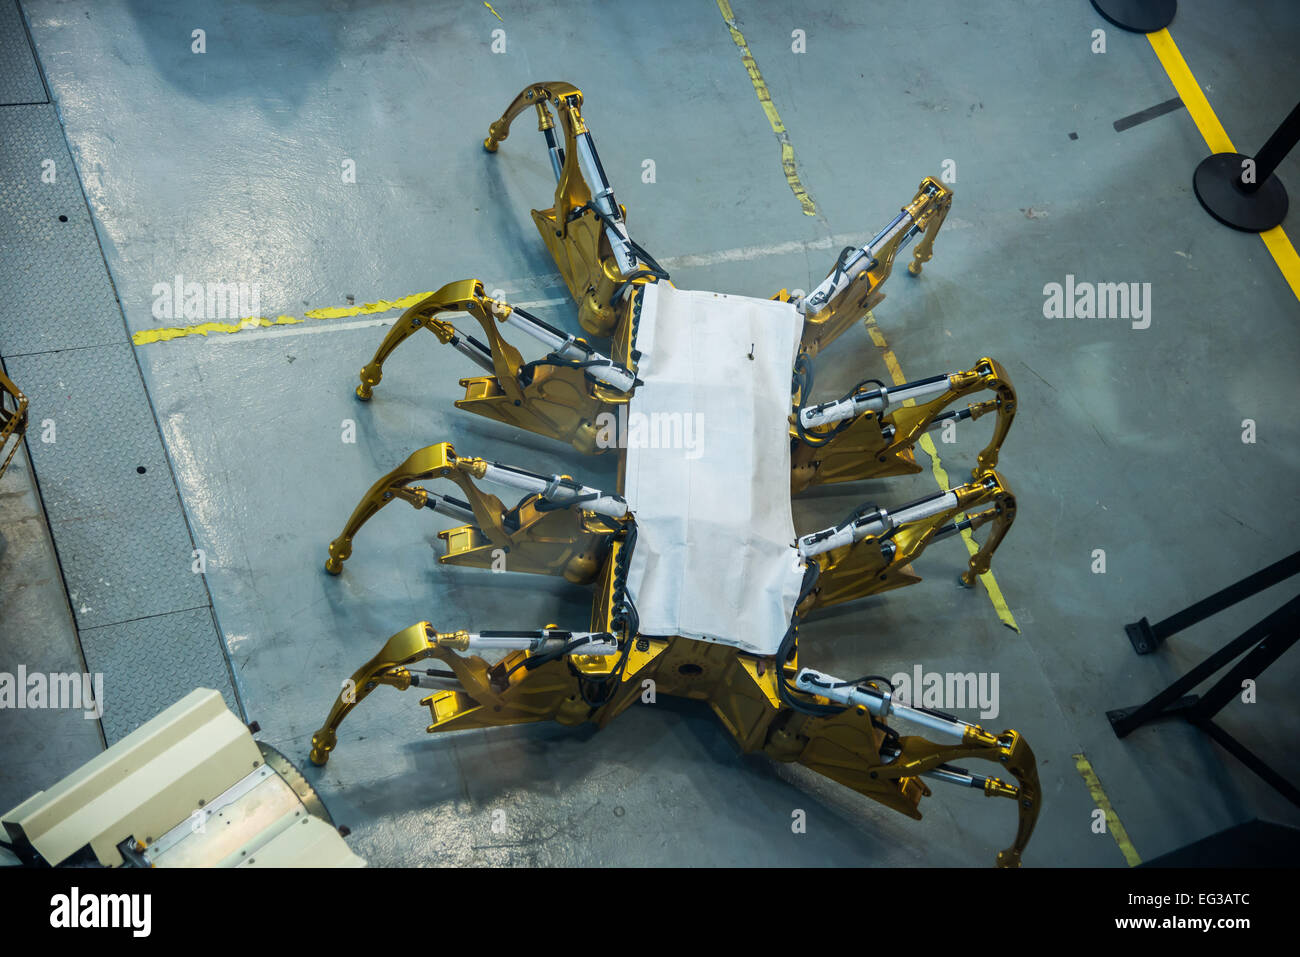 An eight-legged spider-like robot is tested at the NASA Johnson Space Center, Houston, Texas, USA. Stock Photo